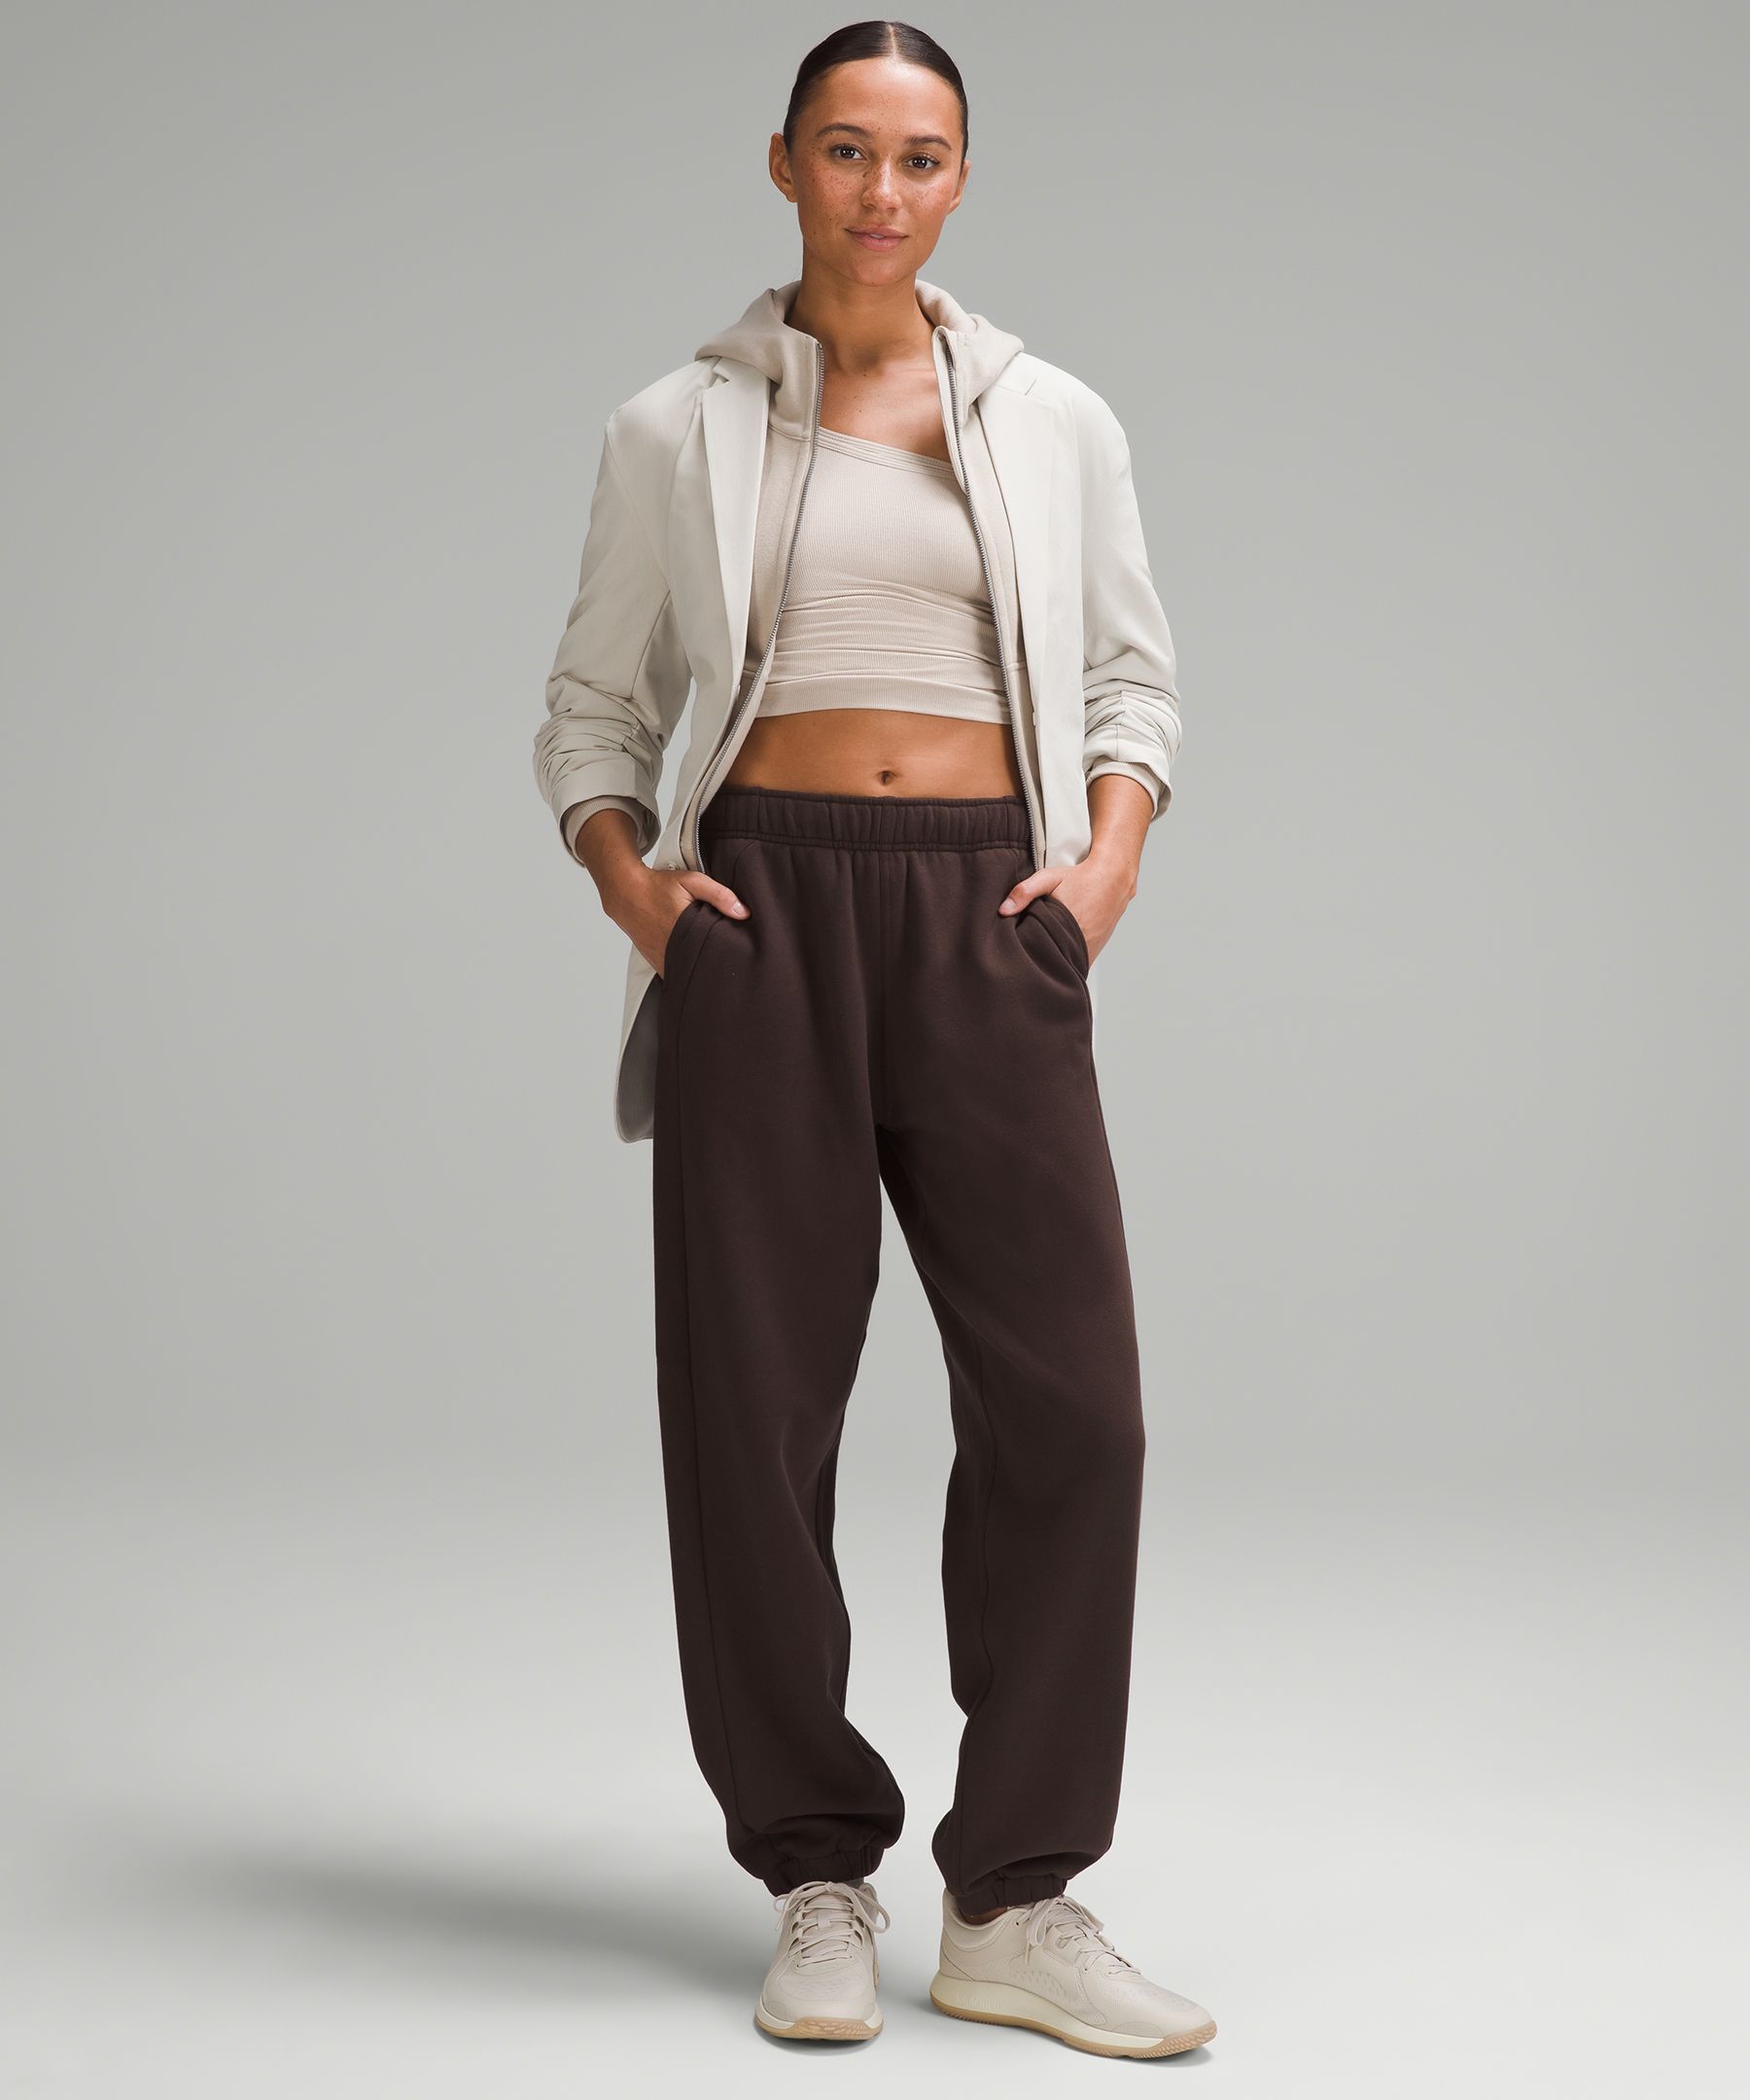 Wjustforu Womens High Waist Joggers Sweatpants Lightweight & Comfortable  Yoga Pants